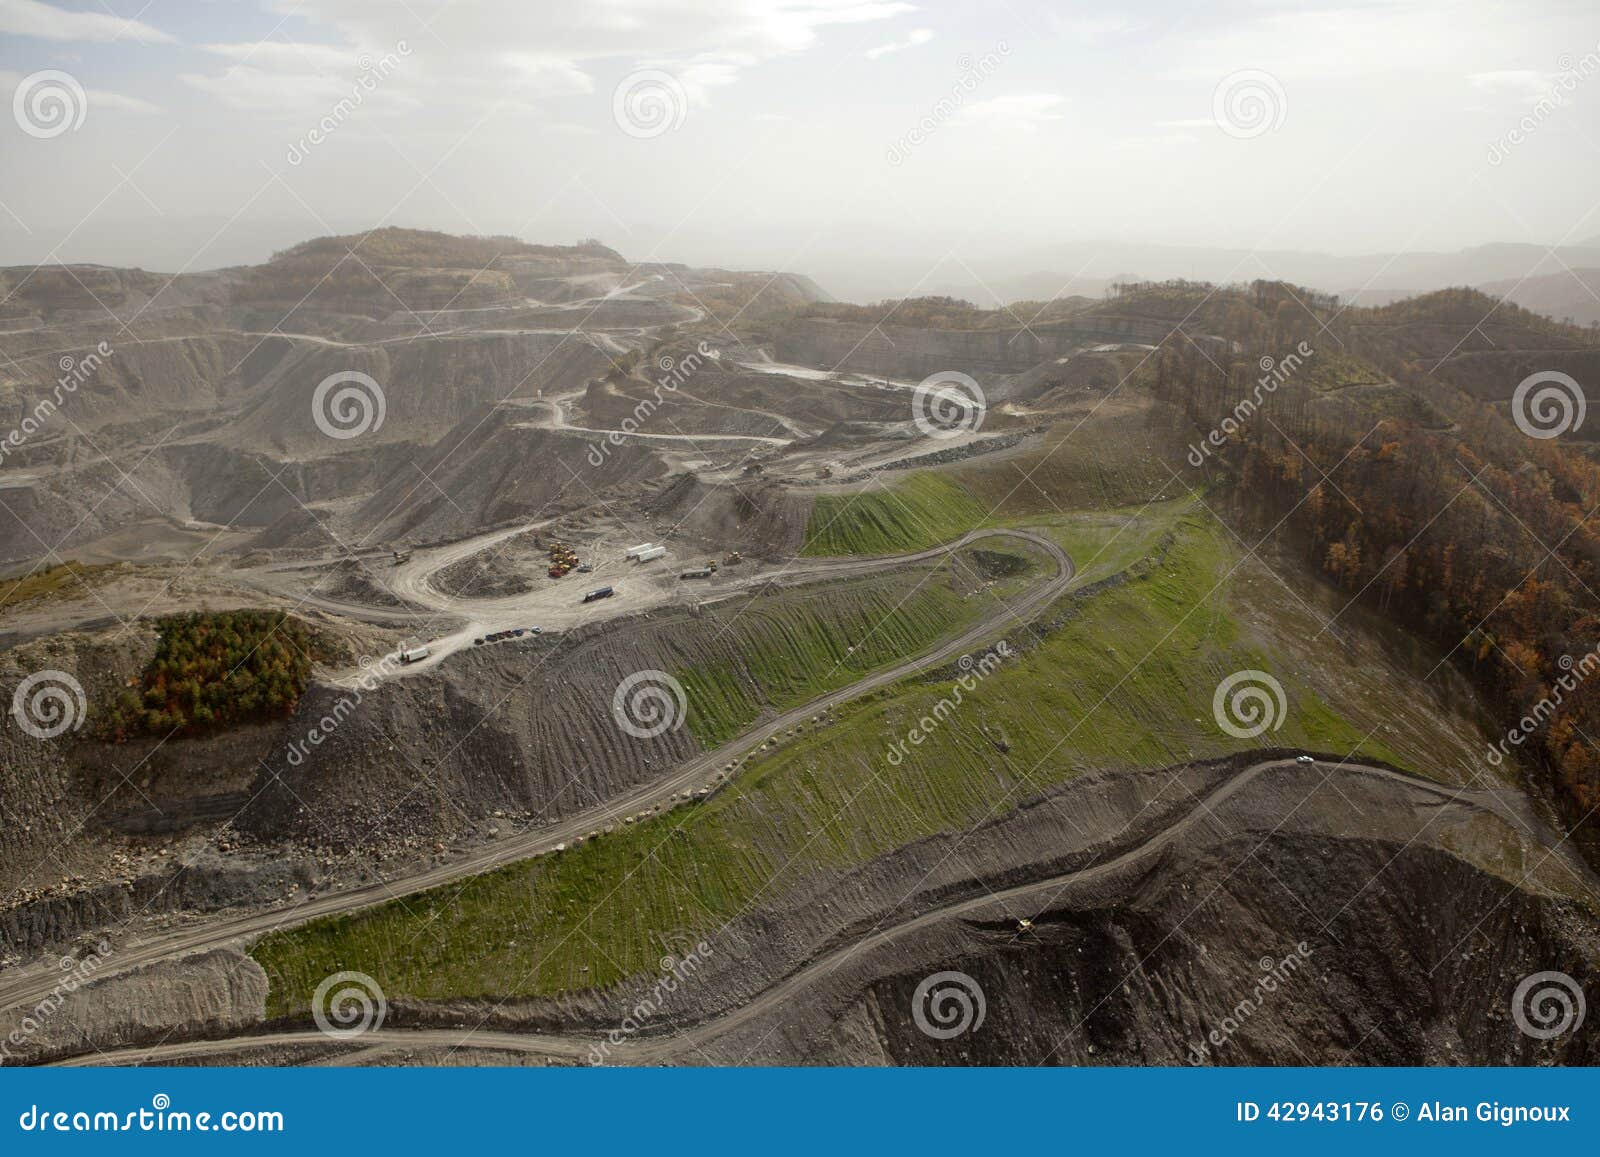 view of a coal mine, appalachia